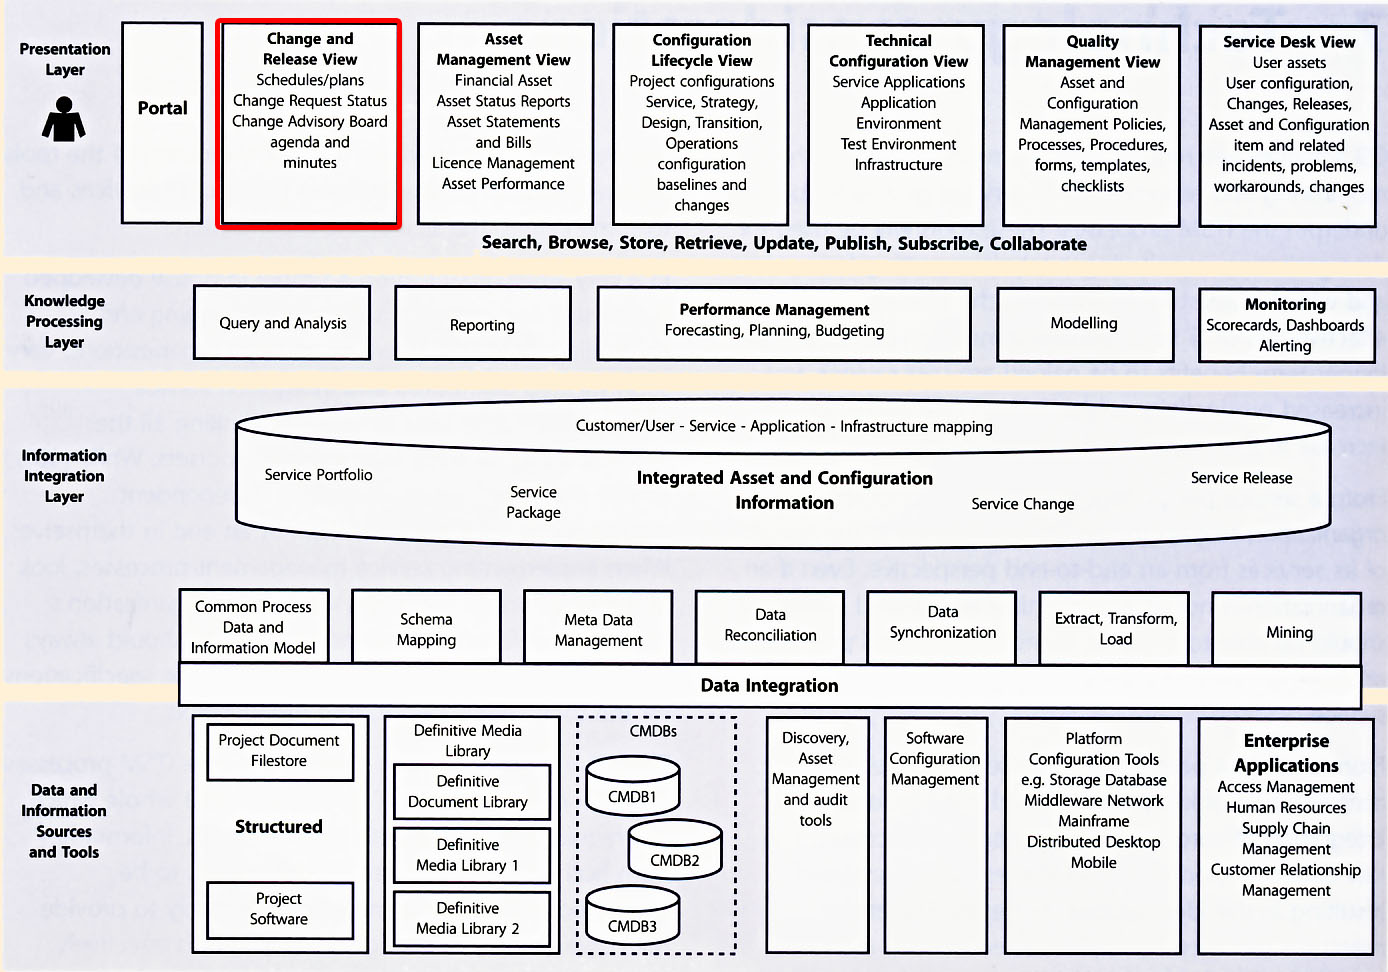 Figure 4.6 Service Knowledge Management System